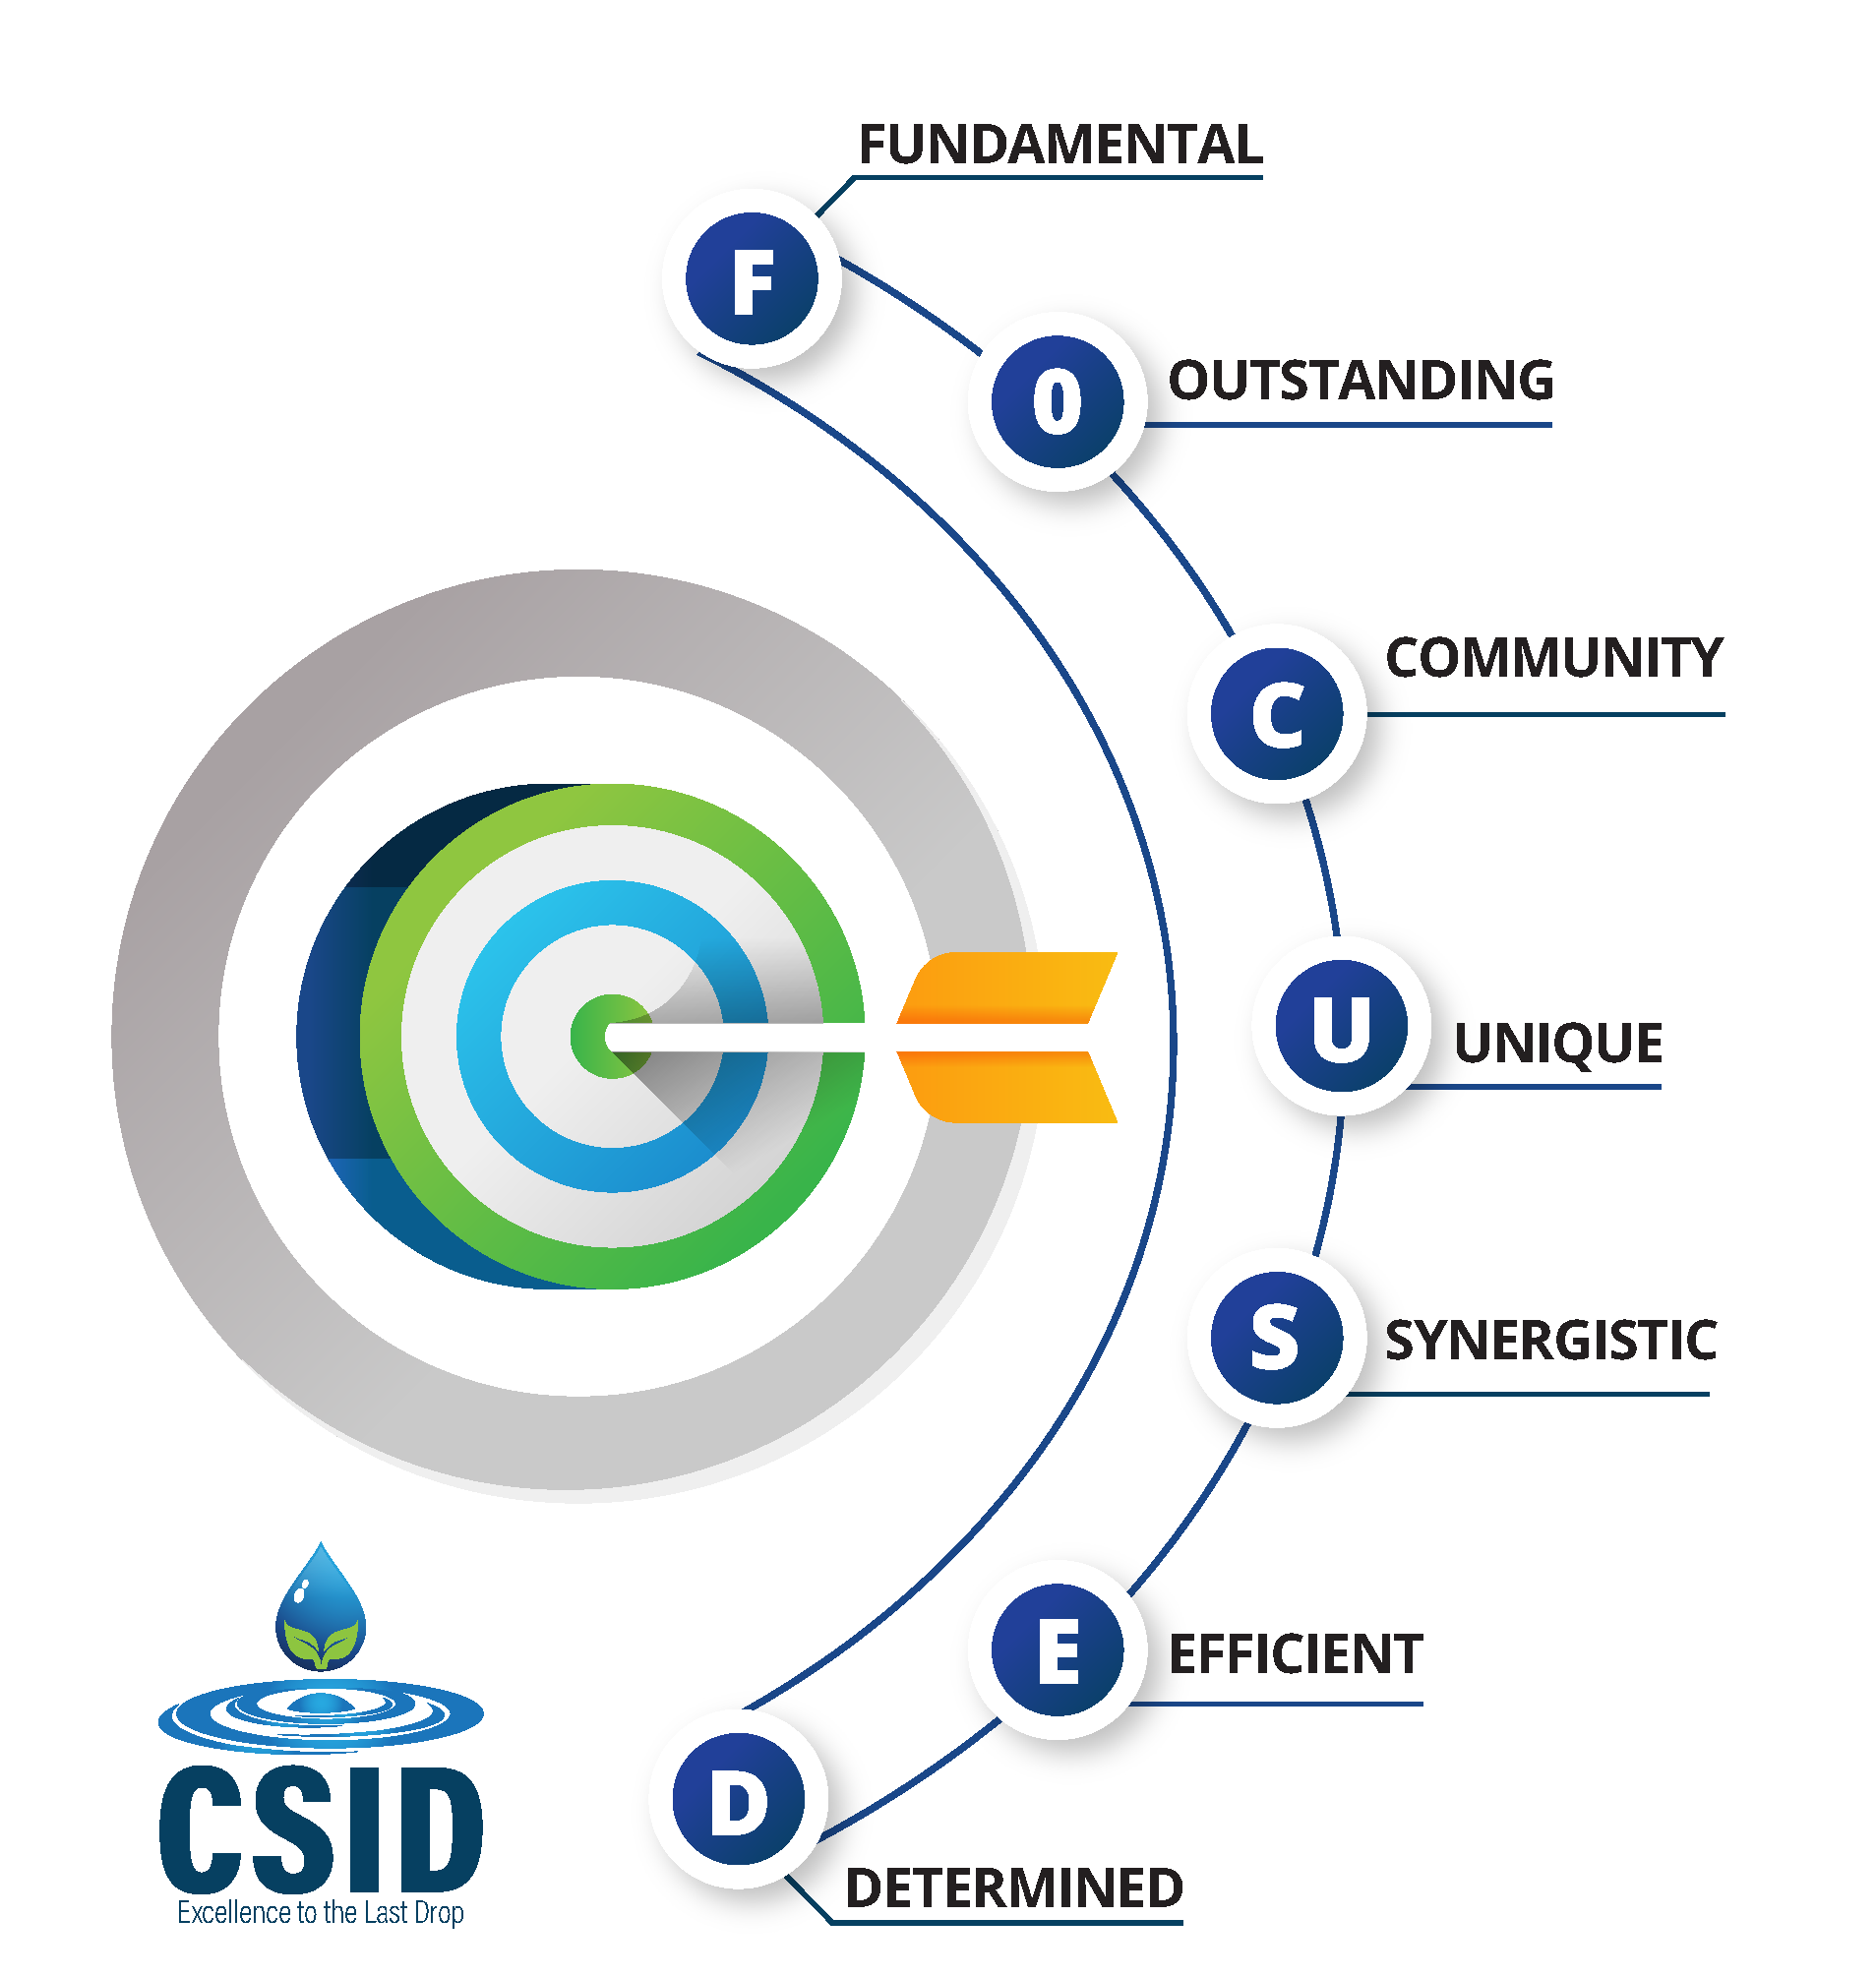 CSID Values "FOCUSED" F = Fundamental O = Outstanding C = Community U = Unique S = Synergistic E = Efficient D = Determined